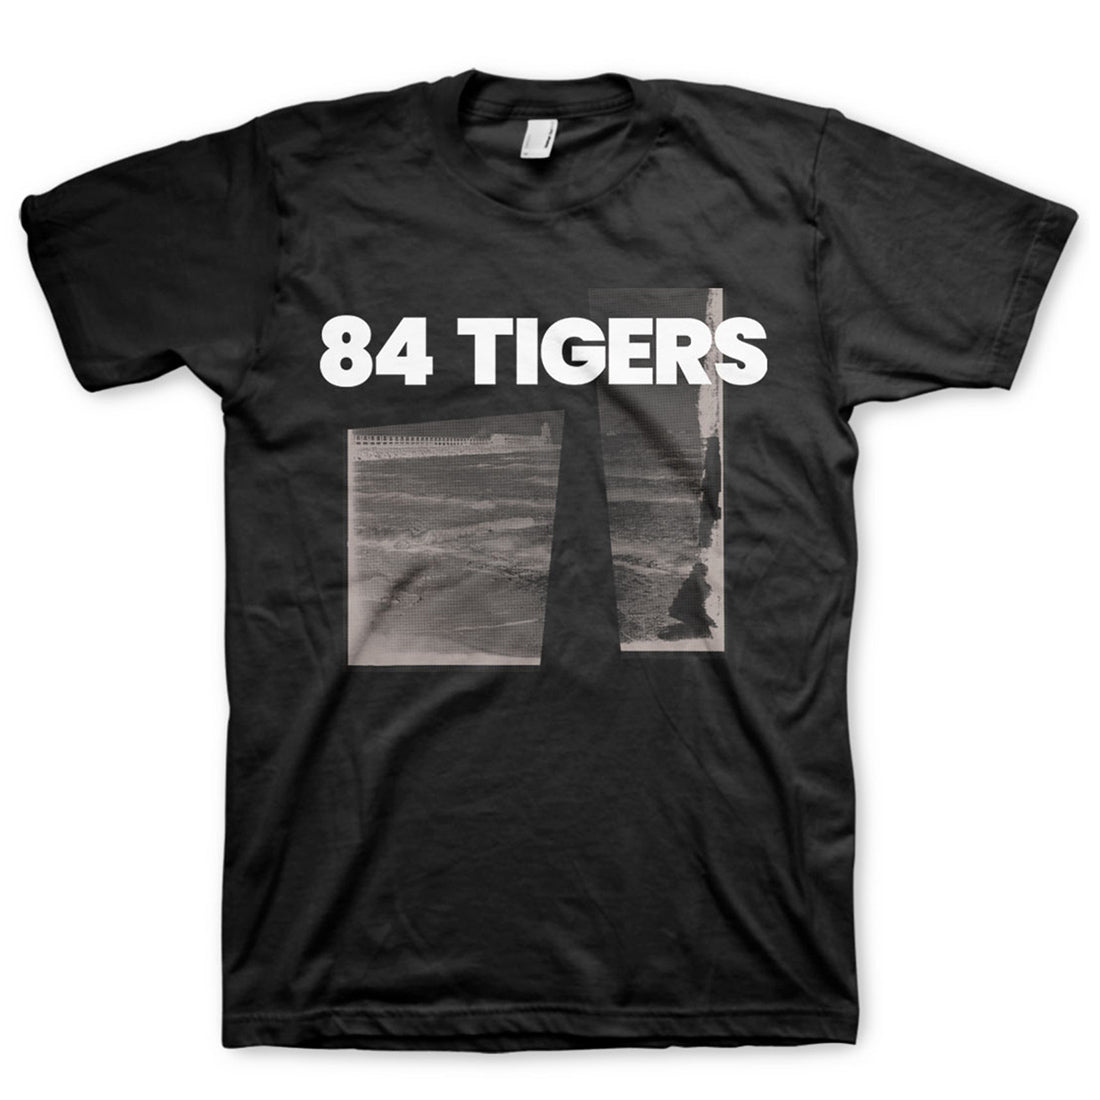 84 Tigers - Lighthouse T-Shirt